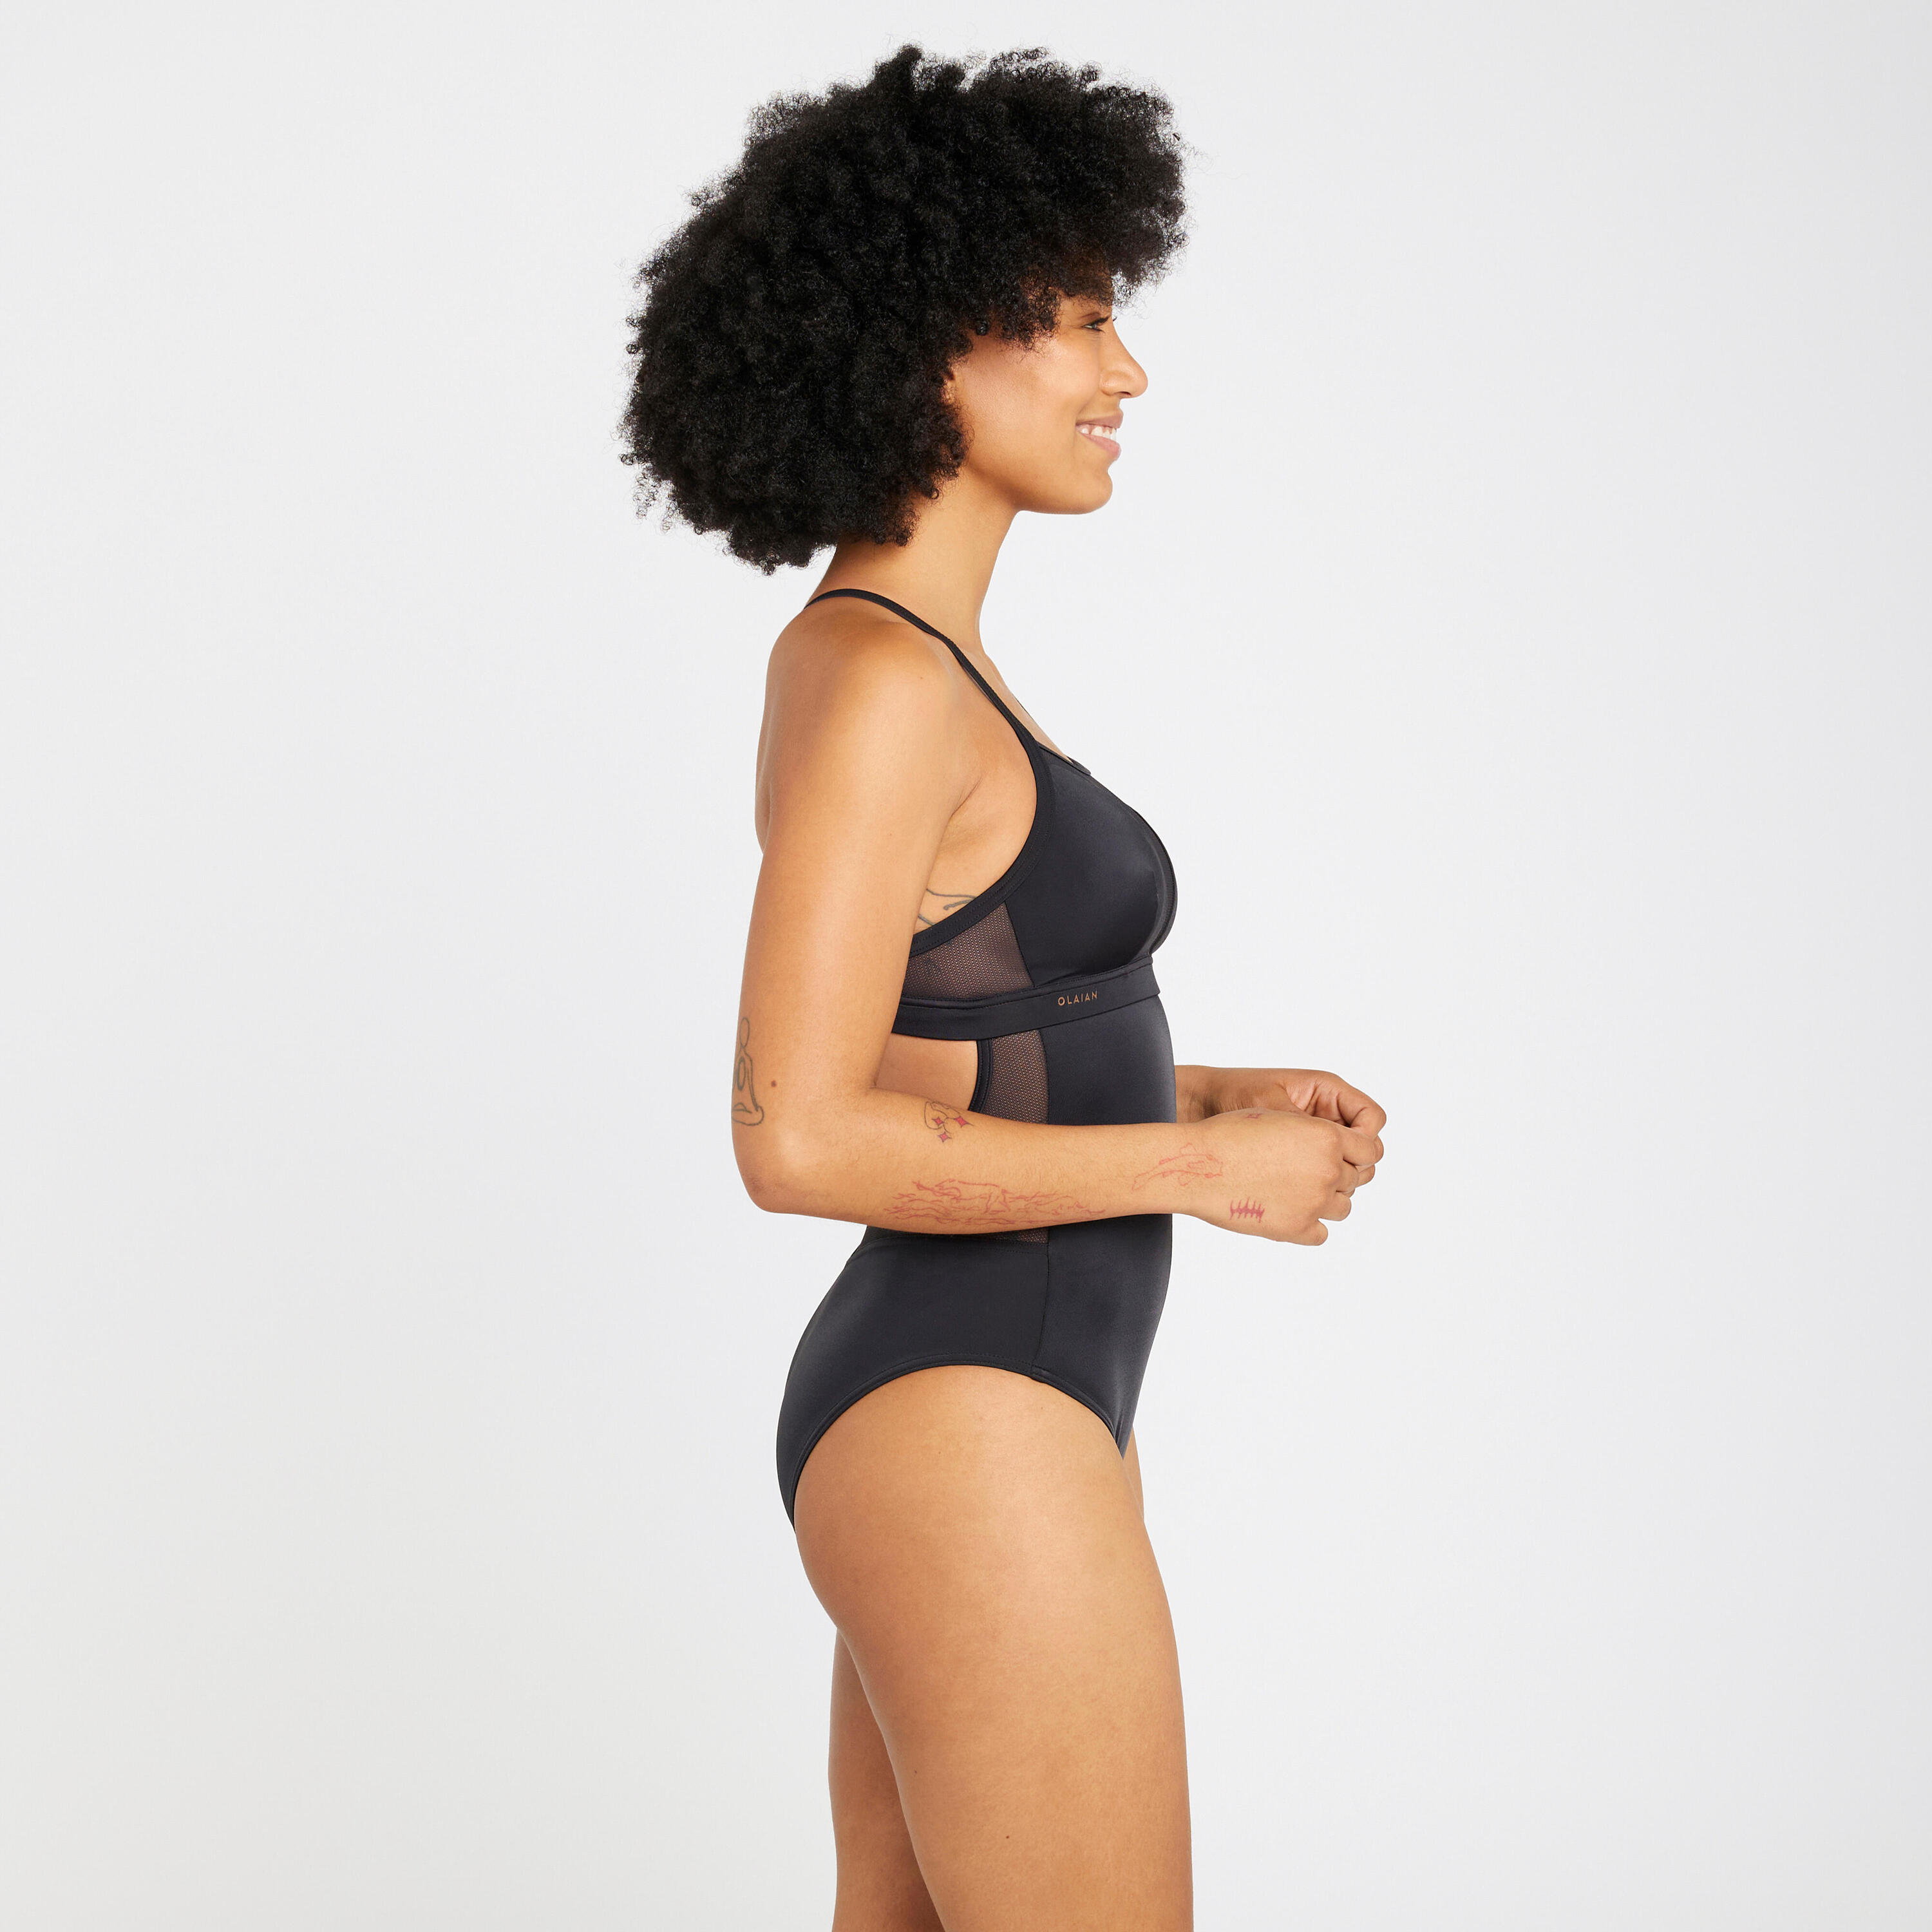 Women's one-piece swimsuit - Elise black 2/6